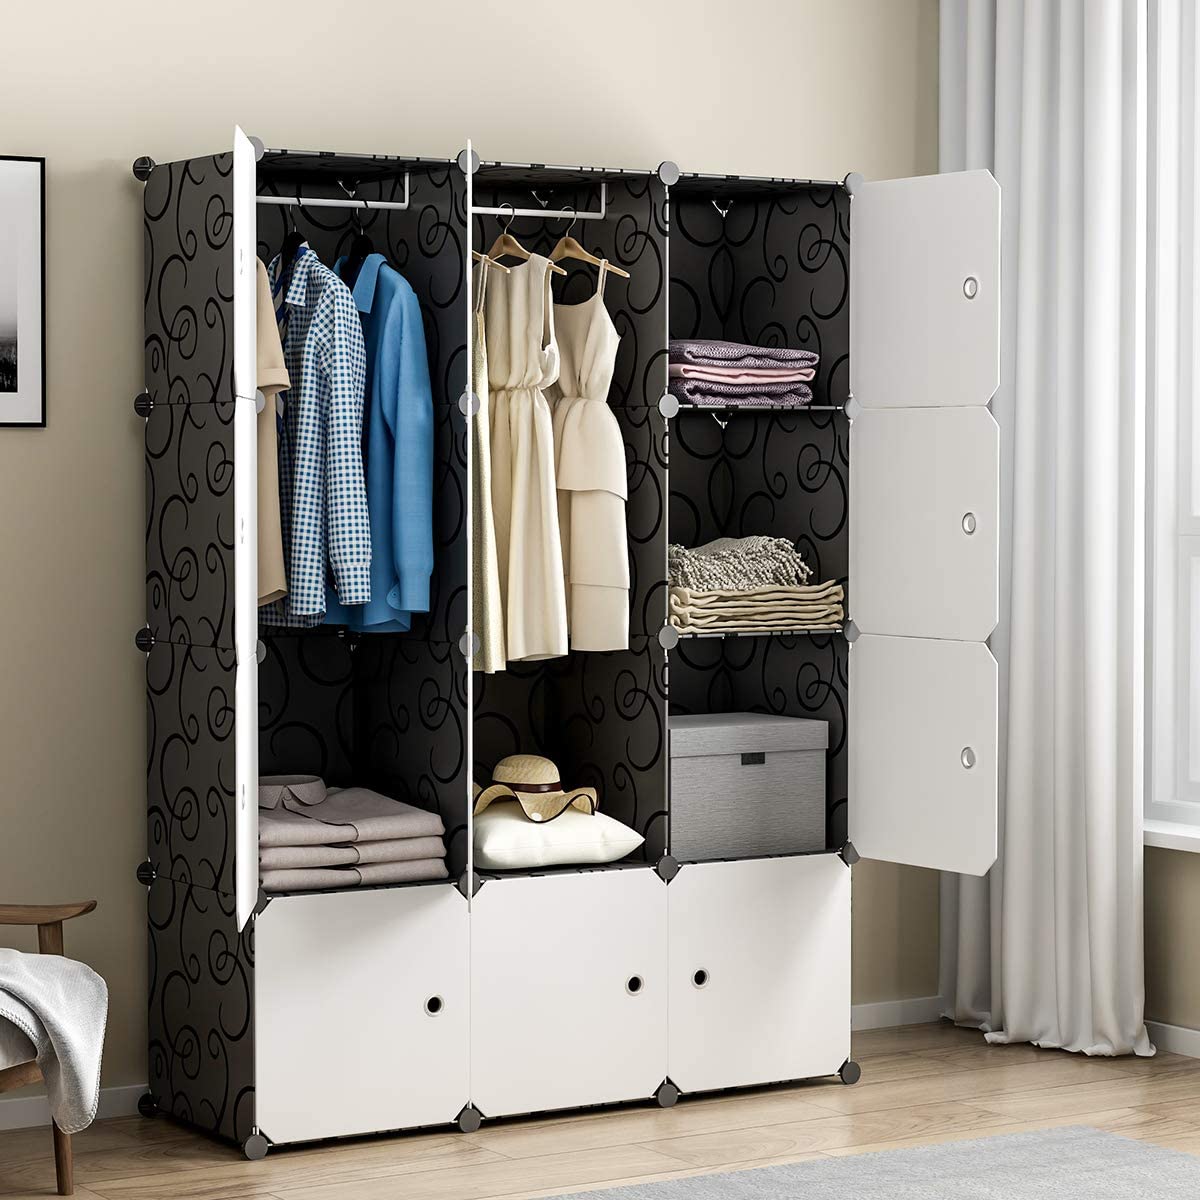 Bedroom Modular Pp Cube Cabinet Storage for Rental House, Bedroom